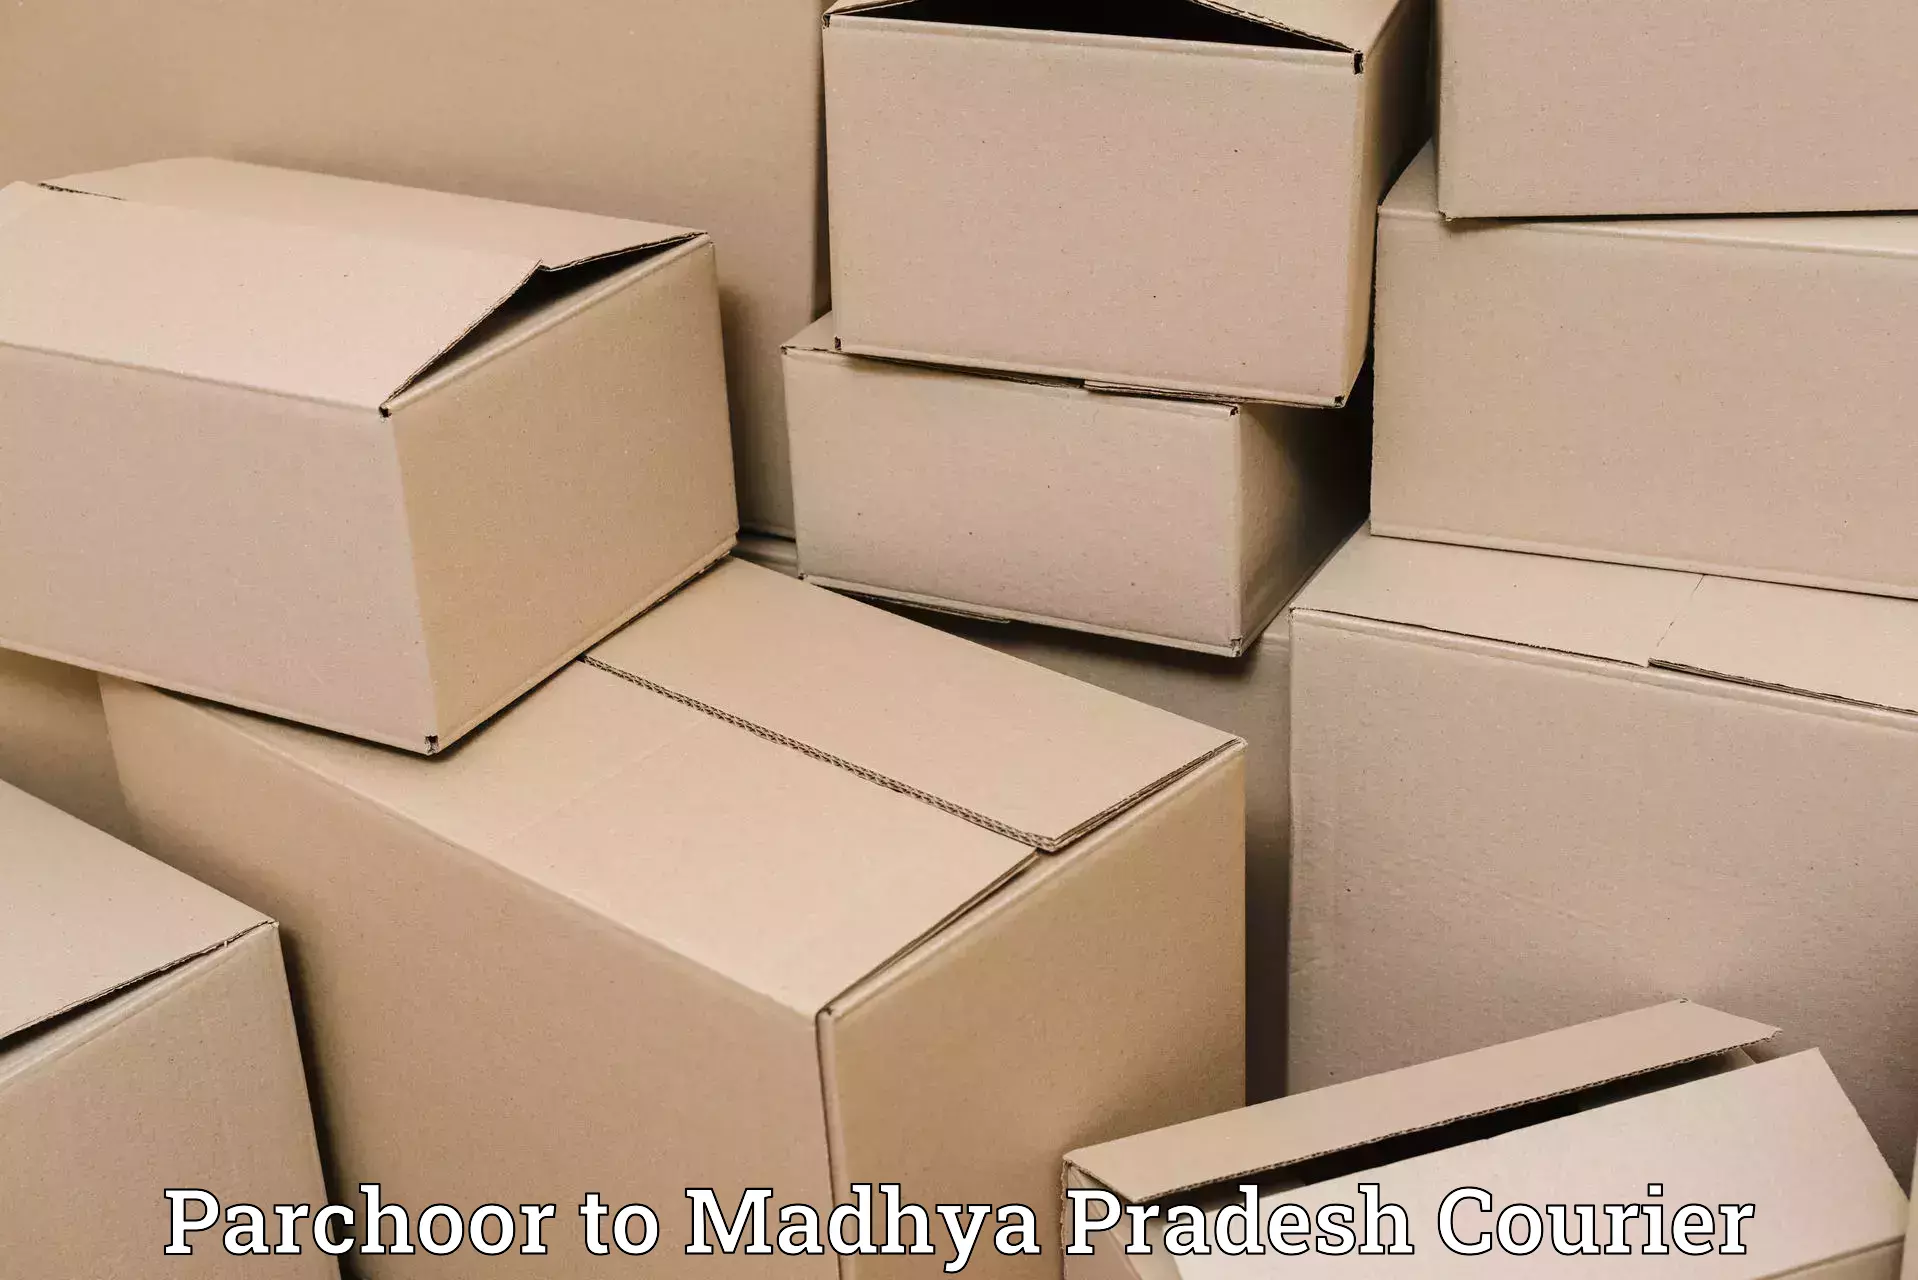 High-speed parcel service Parchoor to Churhat